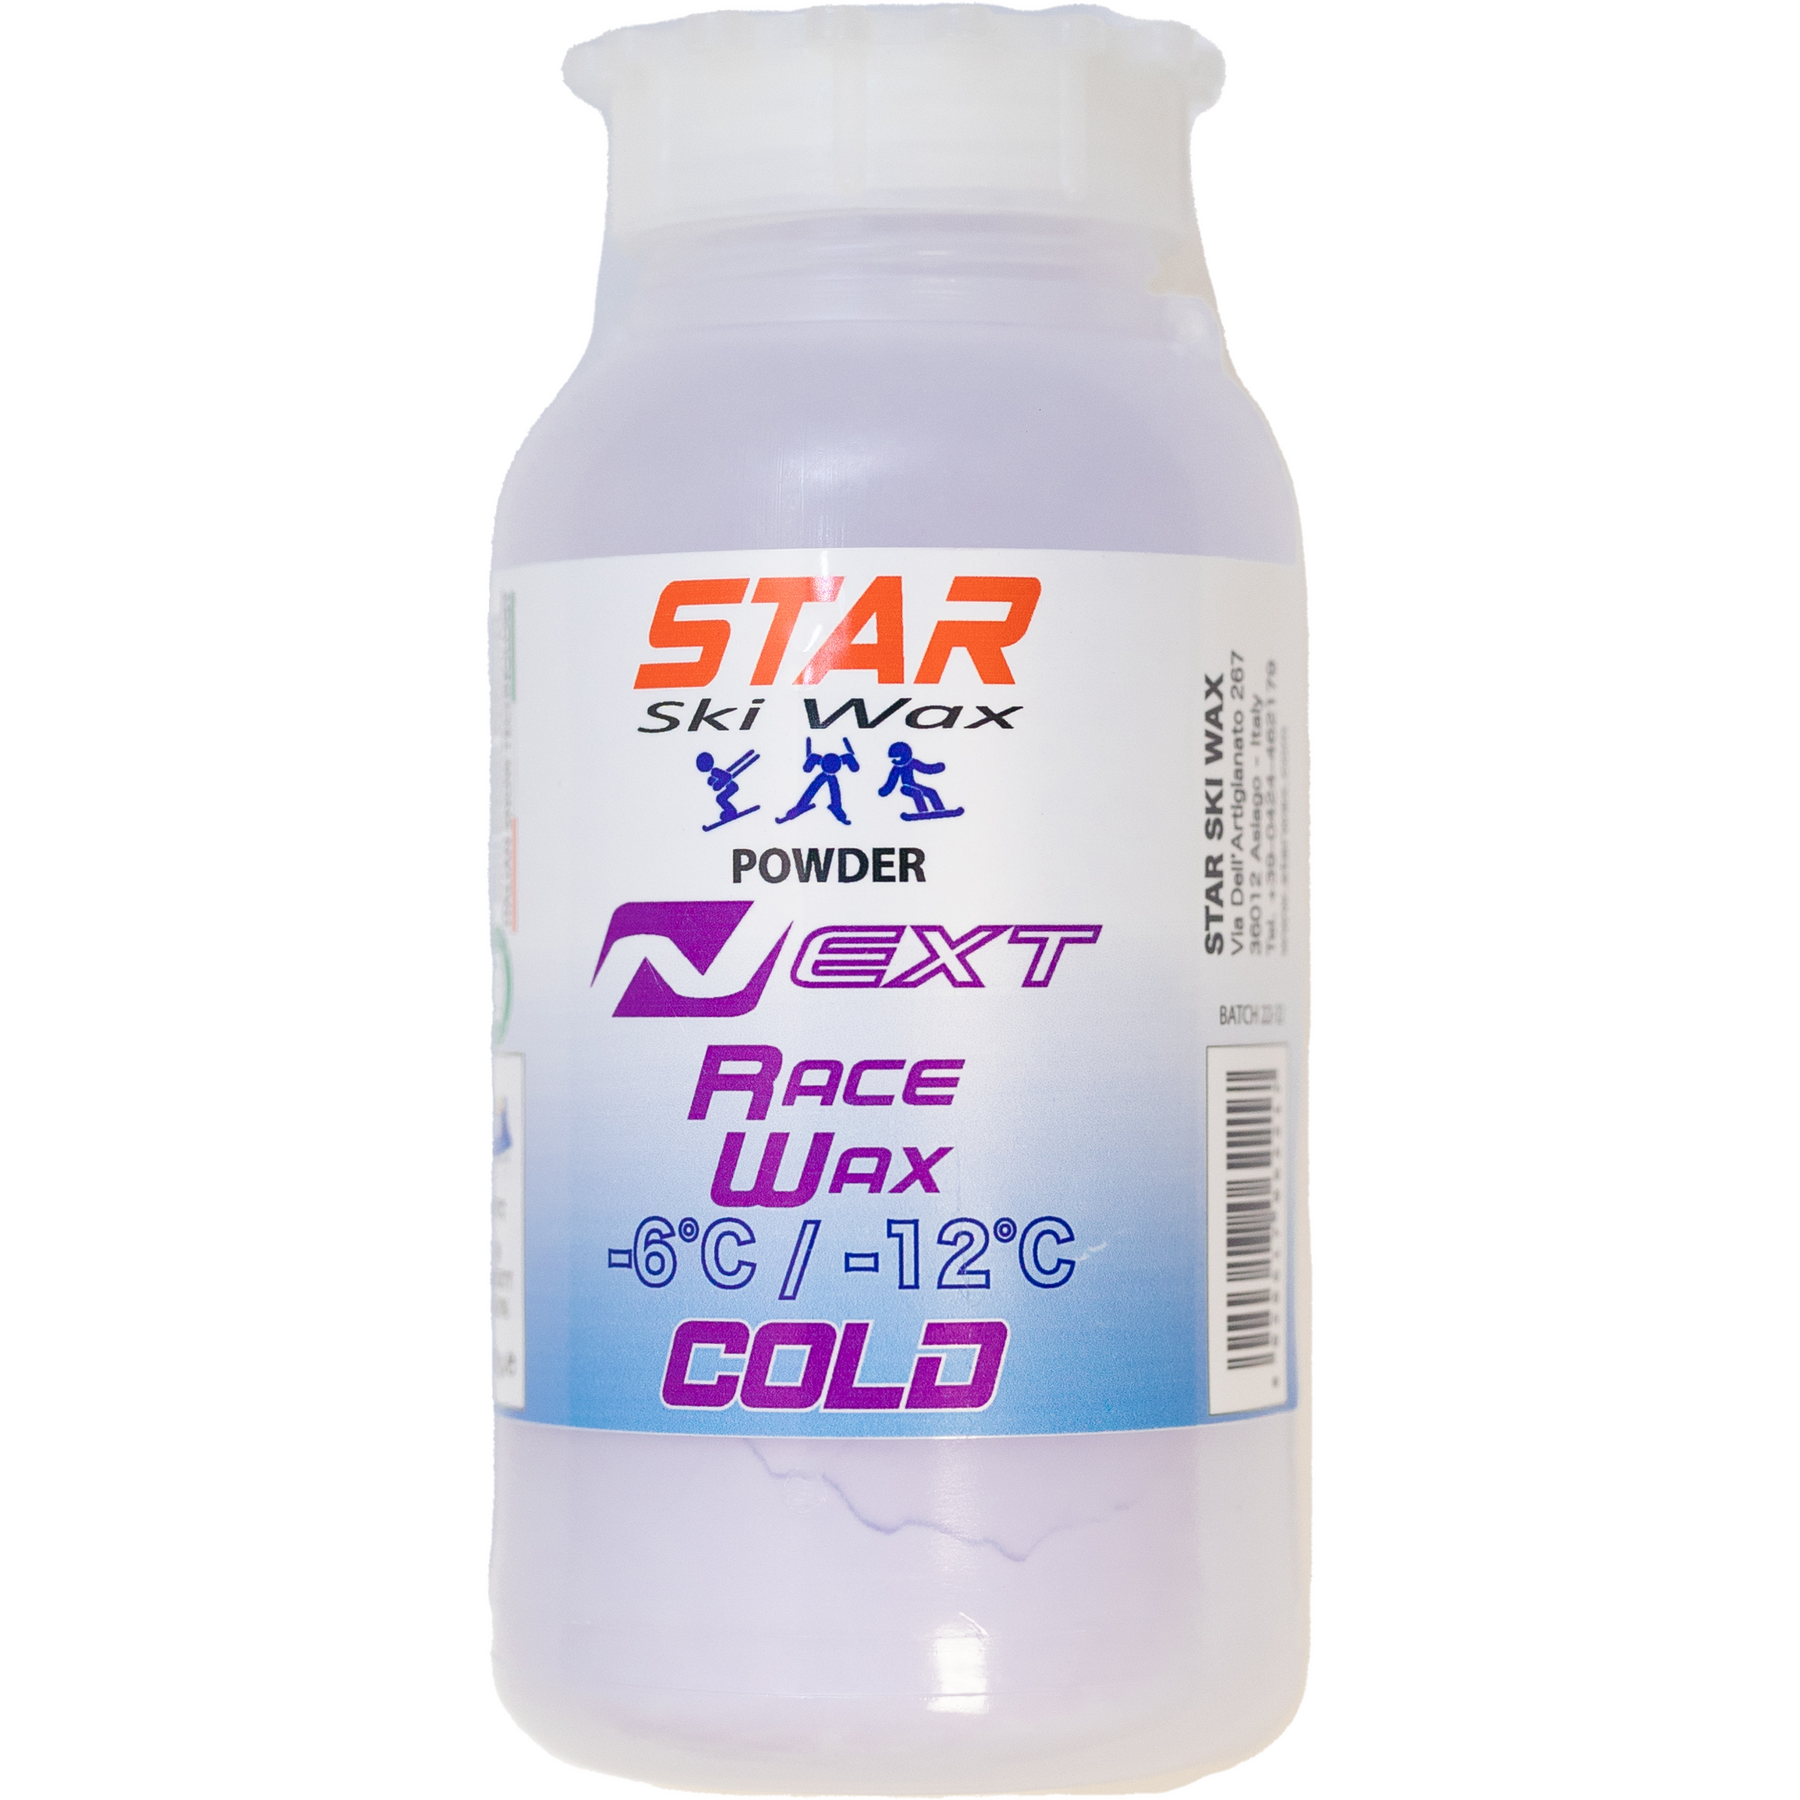 Star Next Racing Powder Cold 100g